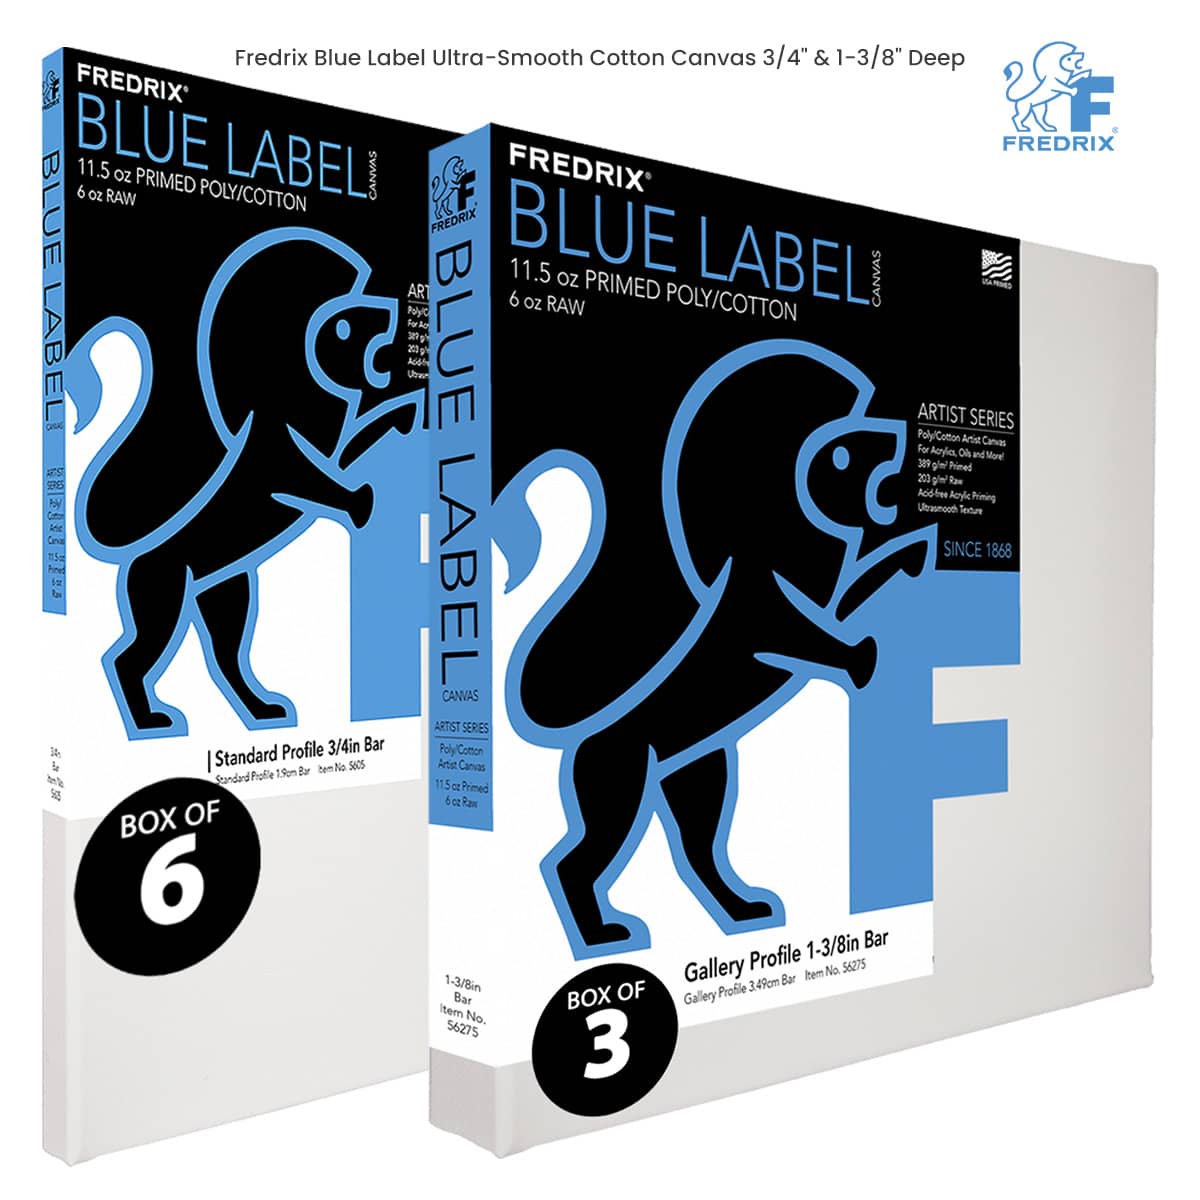 Fredrix Blue Label Cotton Canvas - Ultra-Smooth 3/4 Deep